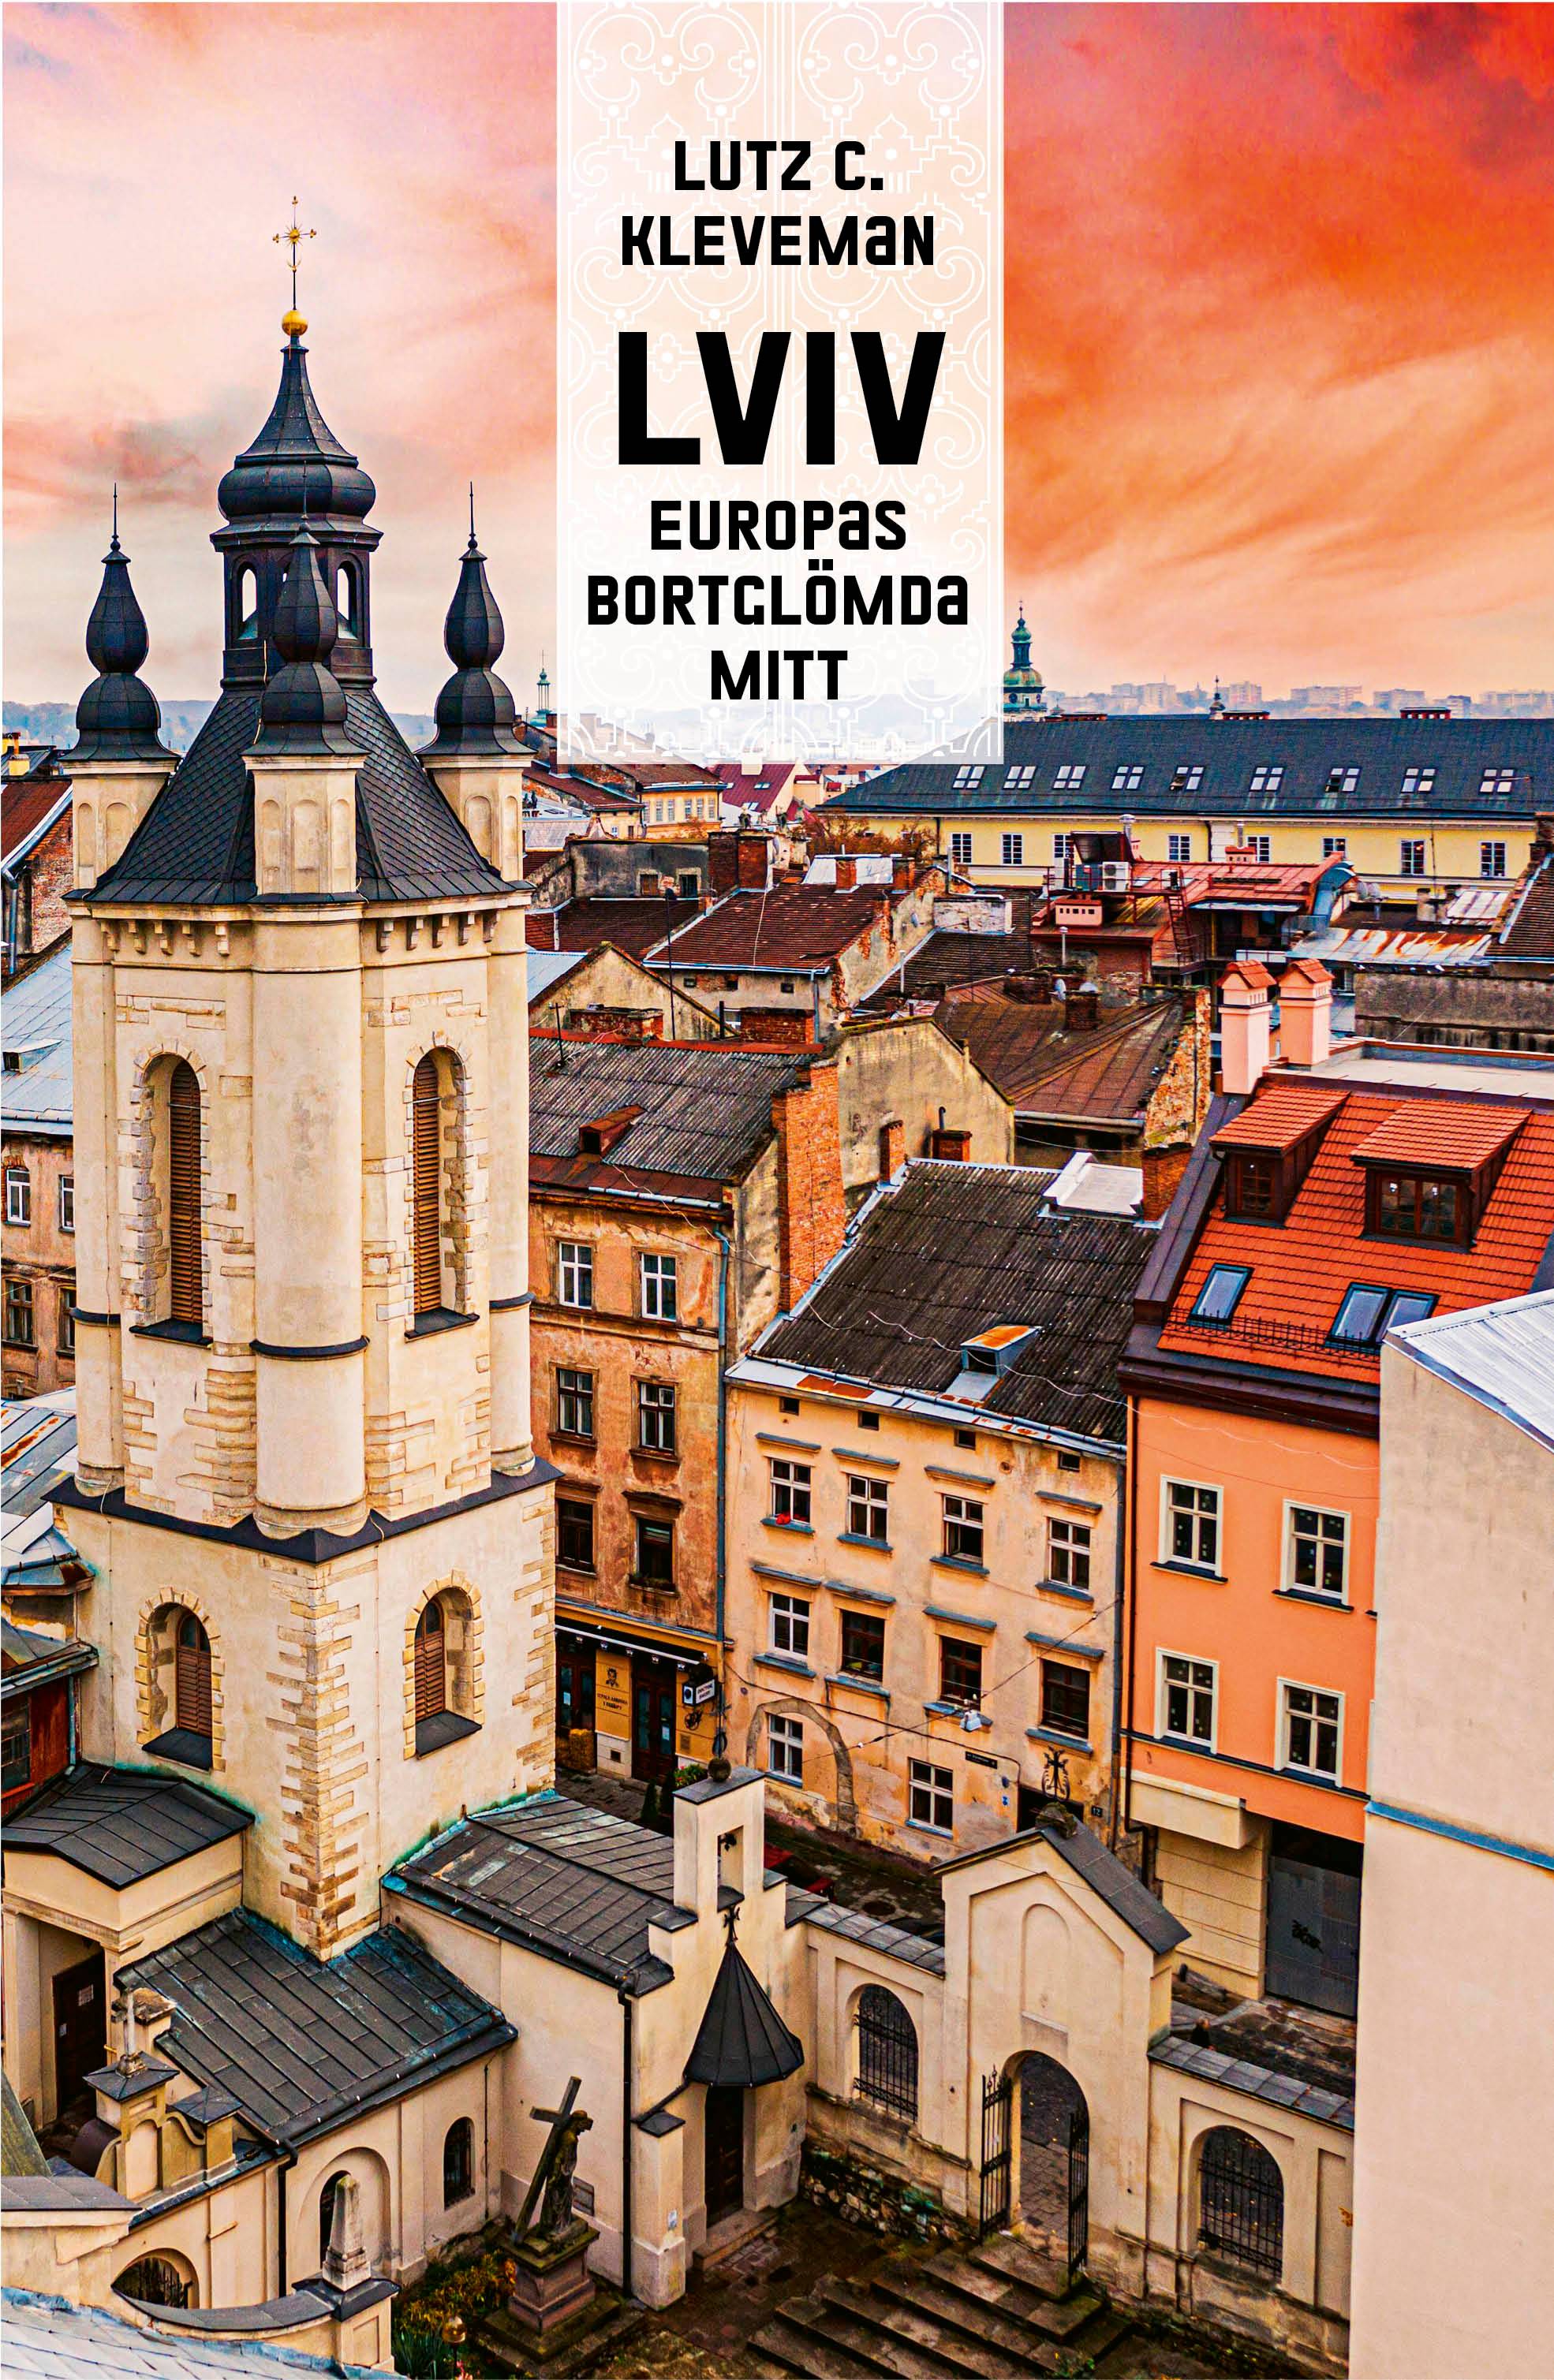 Lviv : Europas bortglömda mitt